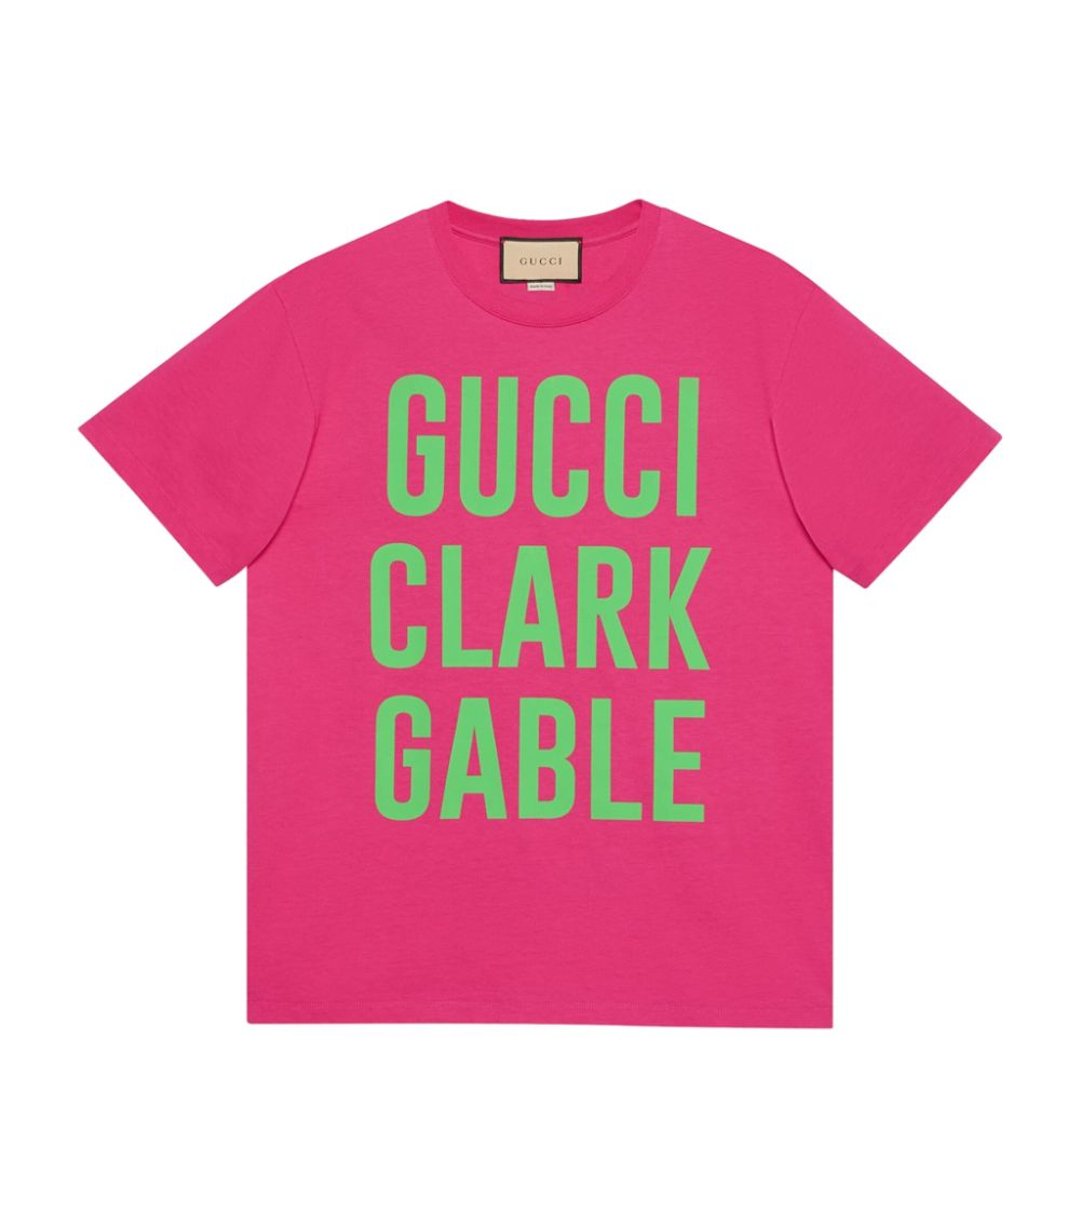 Gucci Clark Gable